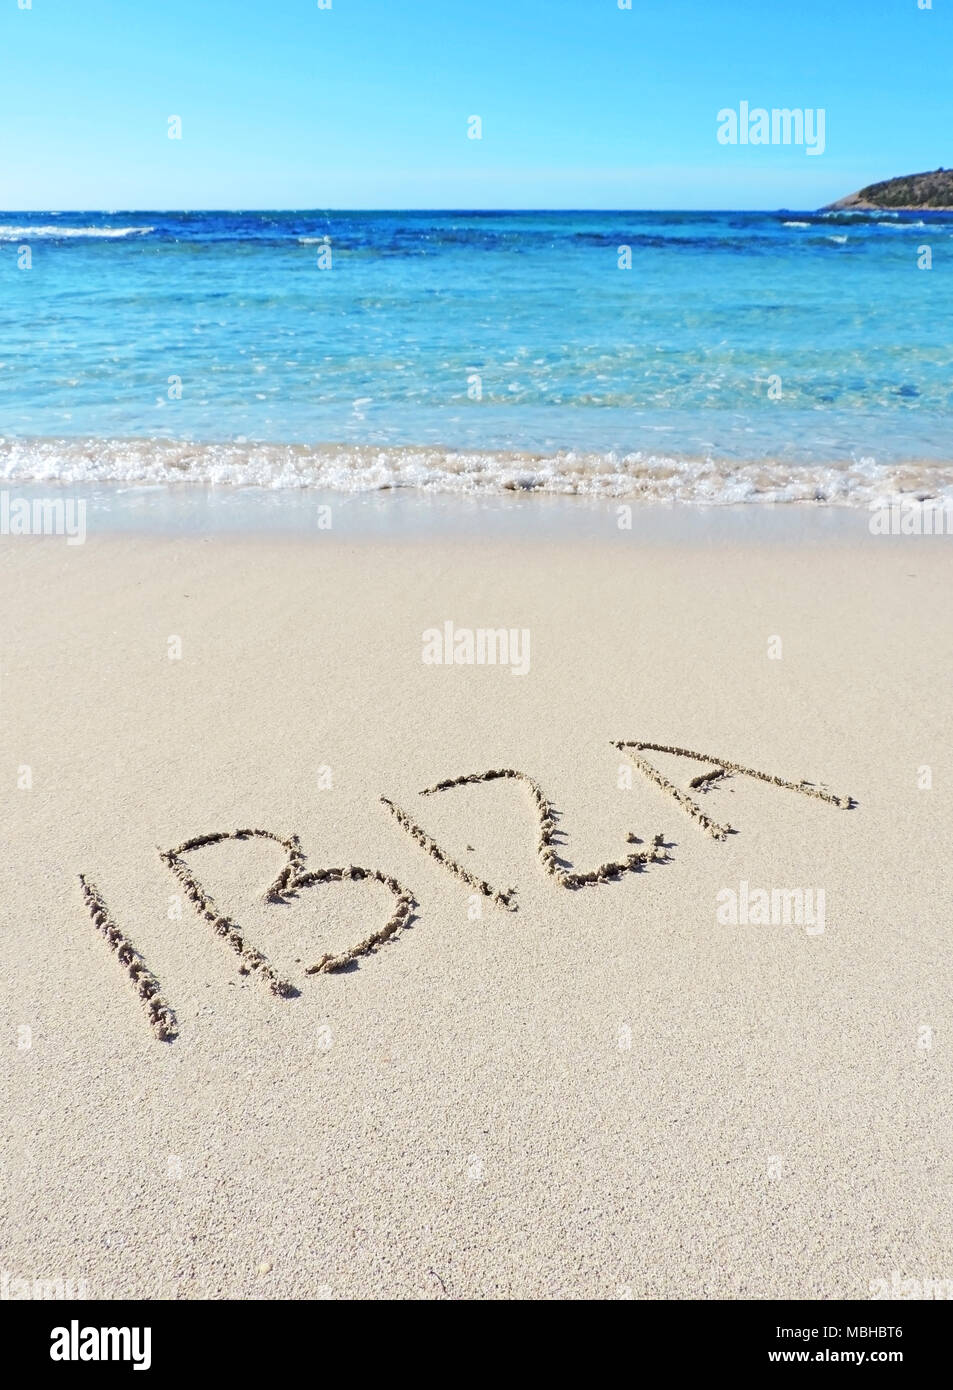 Ibiza text, drawing in the sand. Travel destination, beach holidays on Ibiza Island. Stock Photo